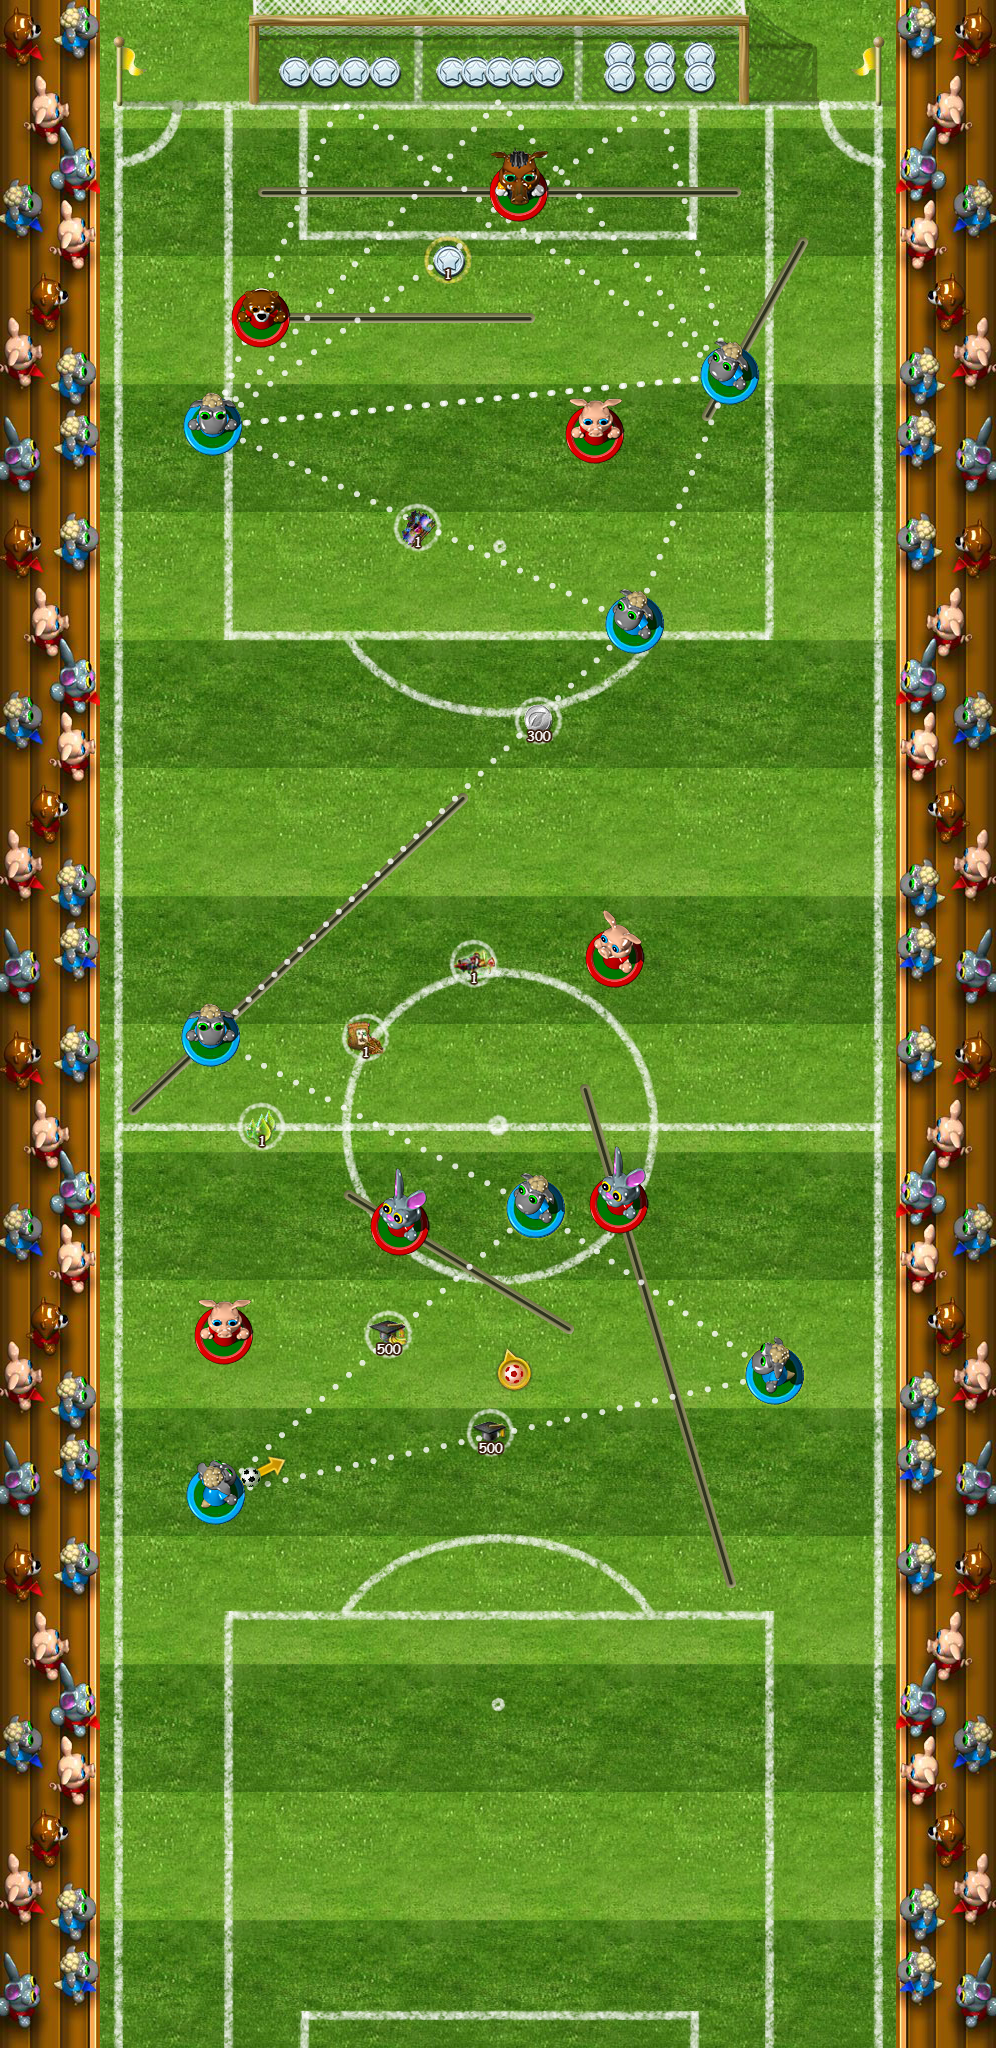 soccerjul2019_layout1.png